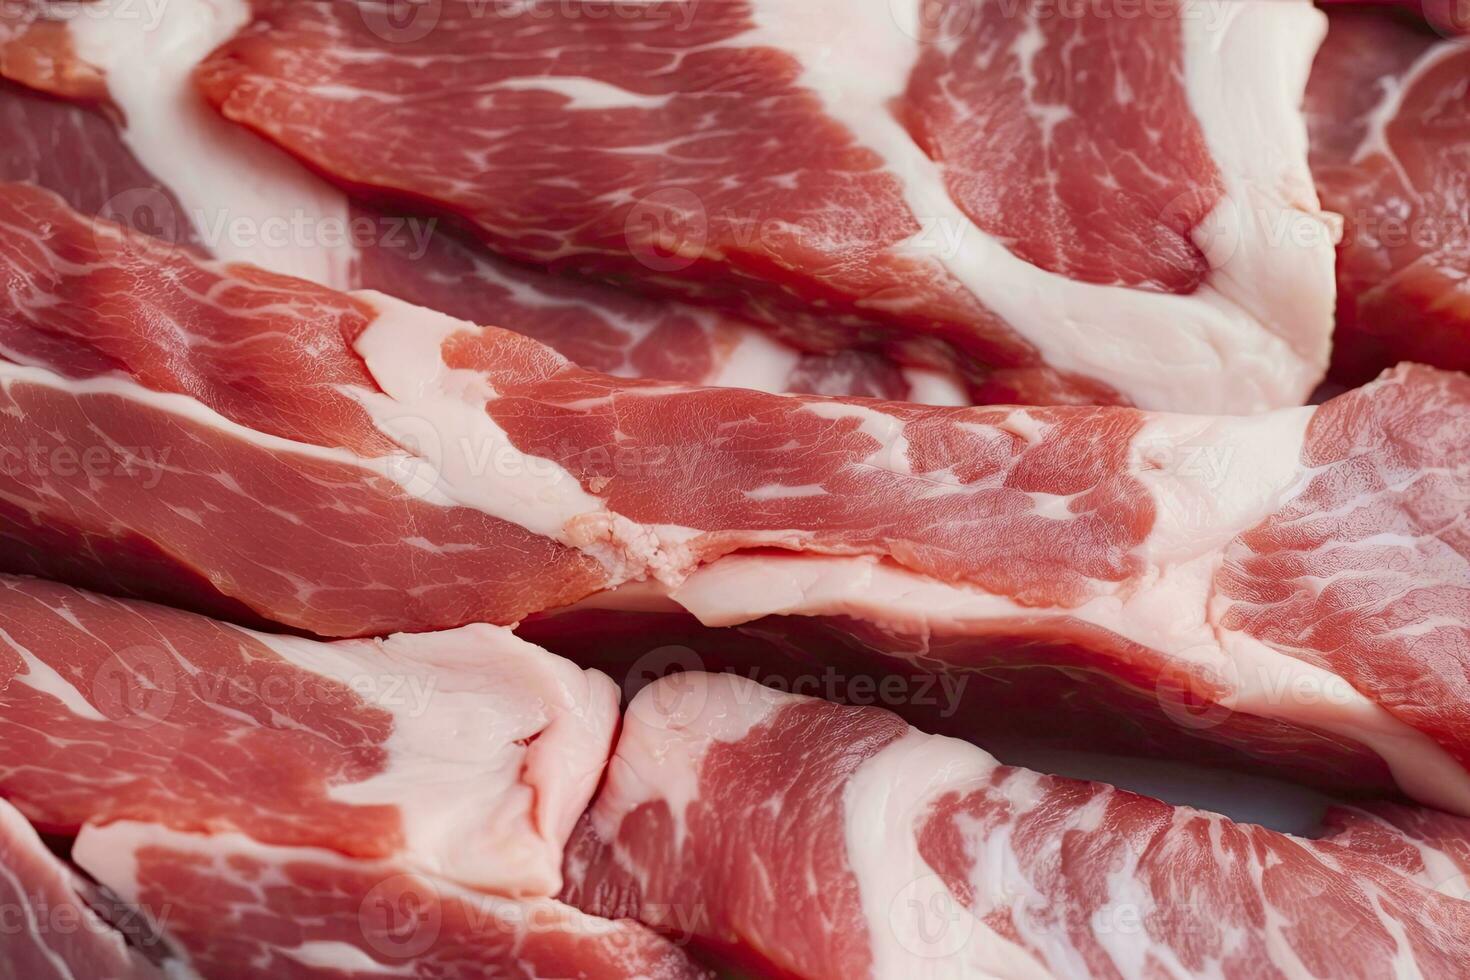 ai gegenereerd macro schot van varkensvlees vlees. vlees getextureerde achtergrond. rundvlees steak is rauw en sappig. ai gegenereerd foto